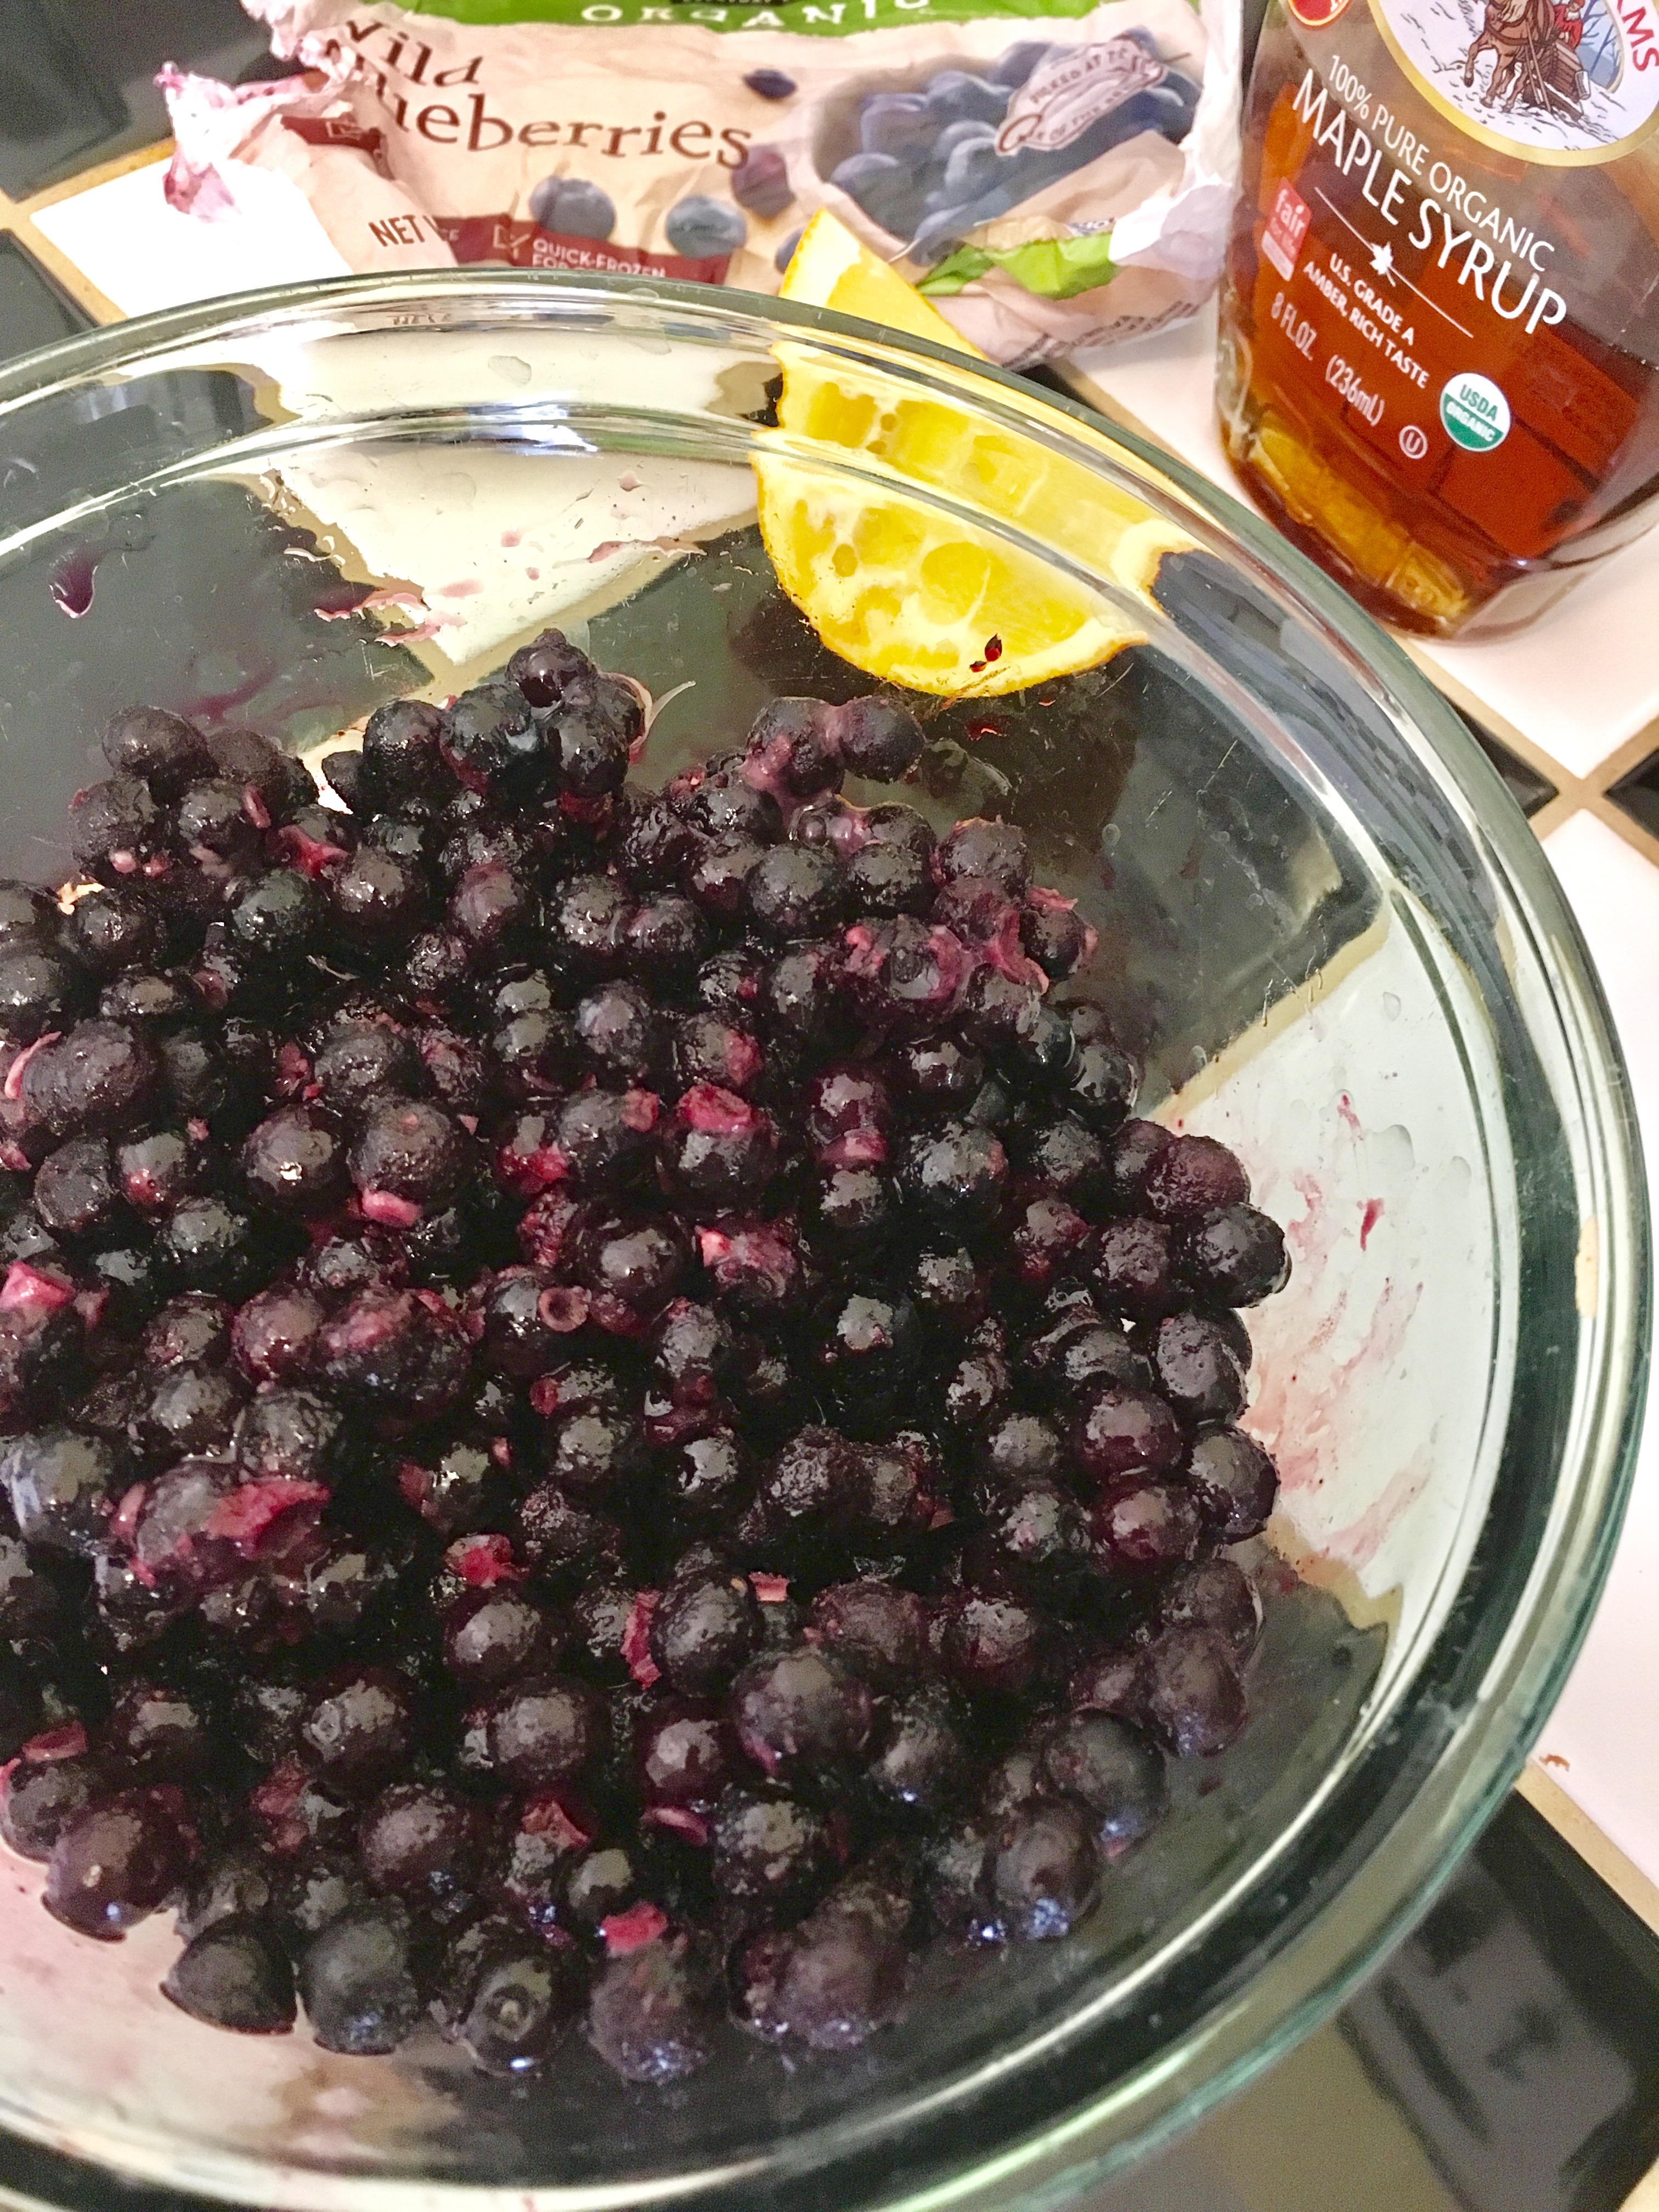 Healthy Wild Blueberry Crumble Bar ingredients